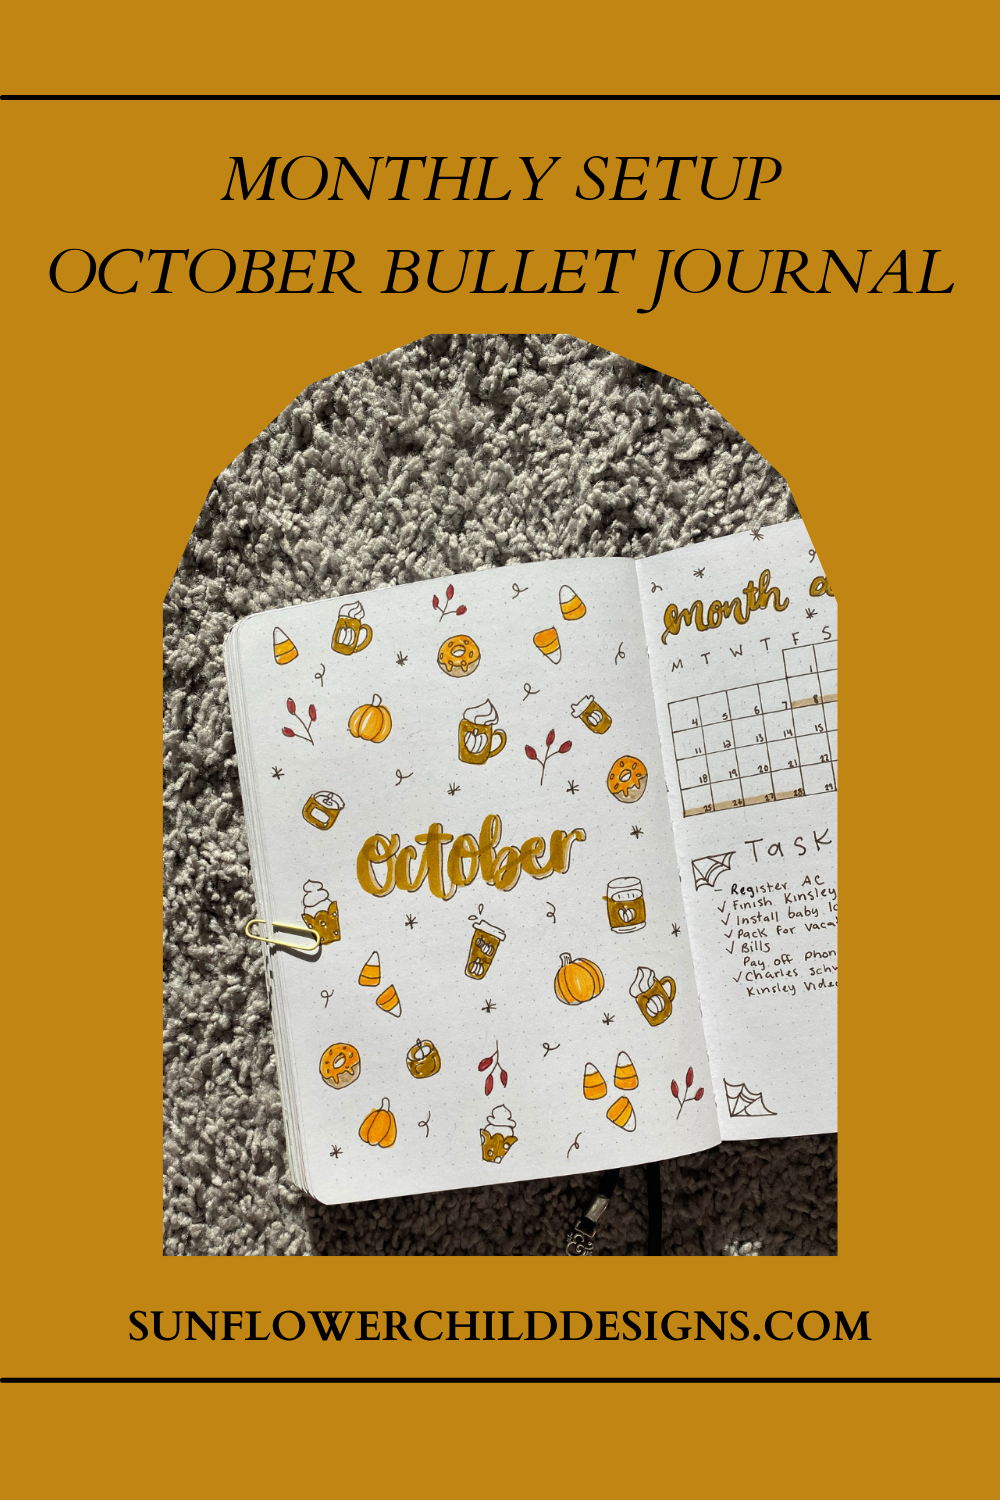 October-bullet-journal-ideas-10.png